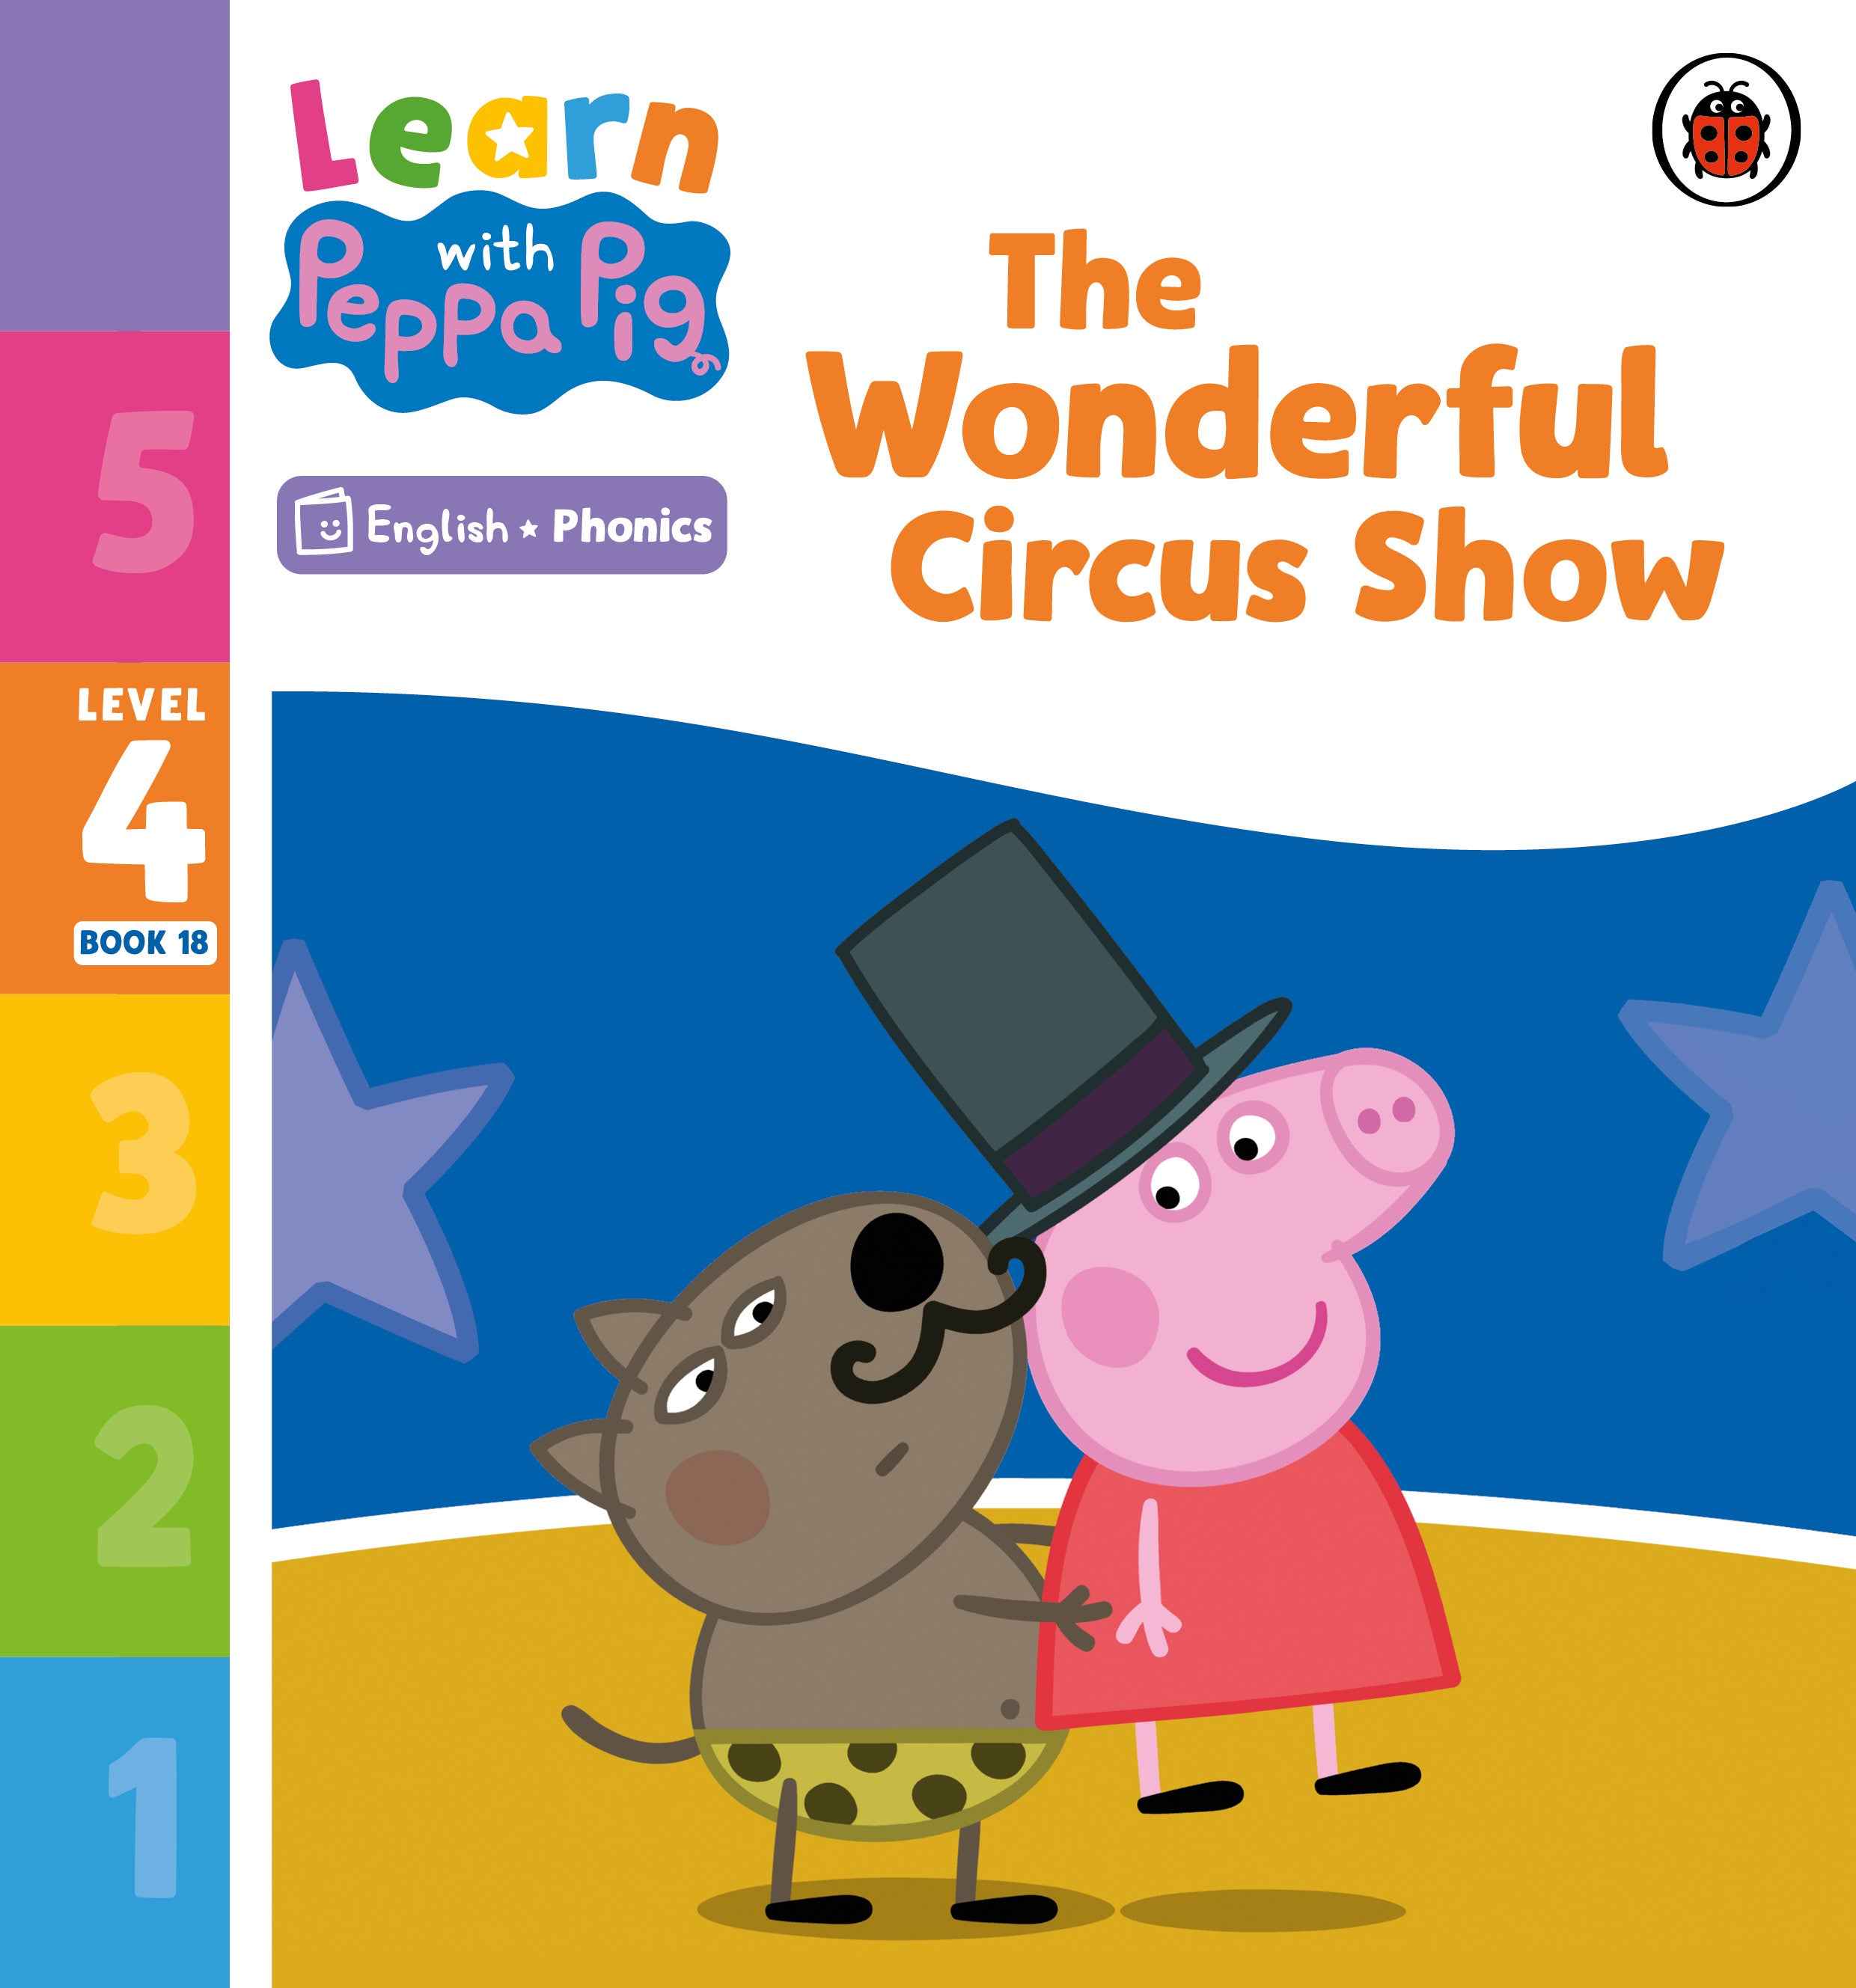 The Wonderful Circus Show